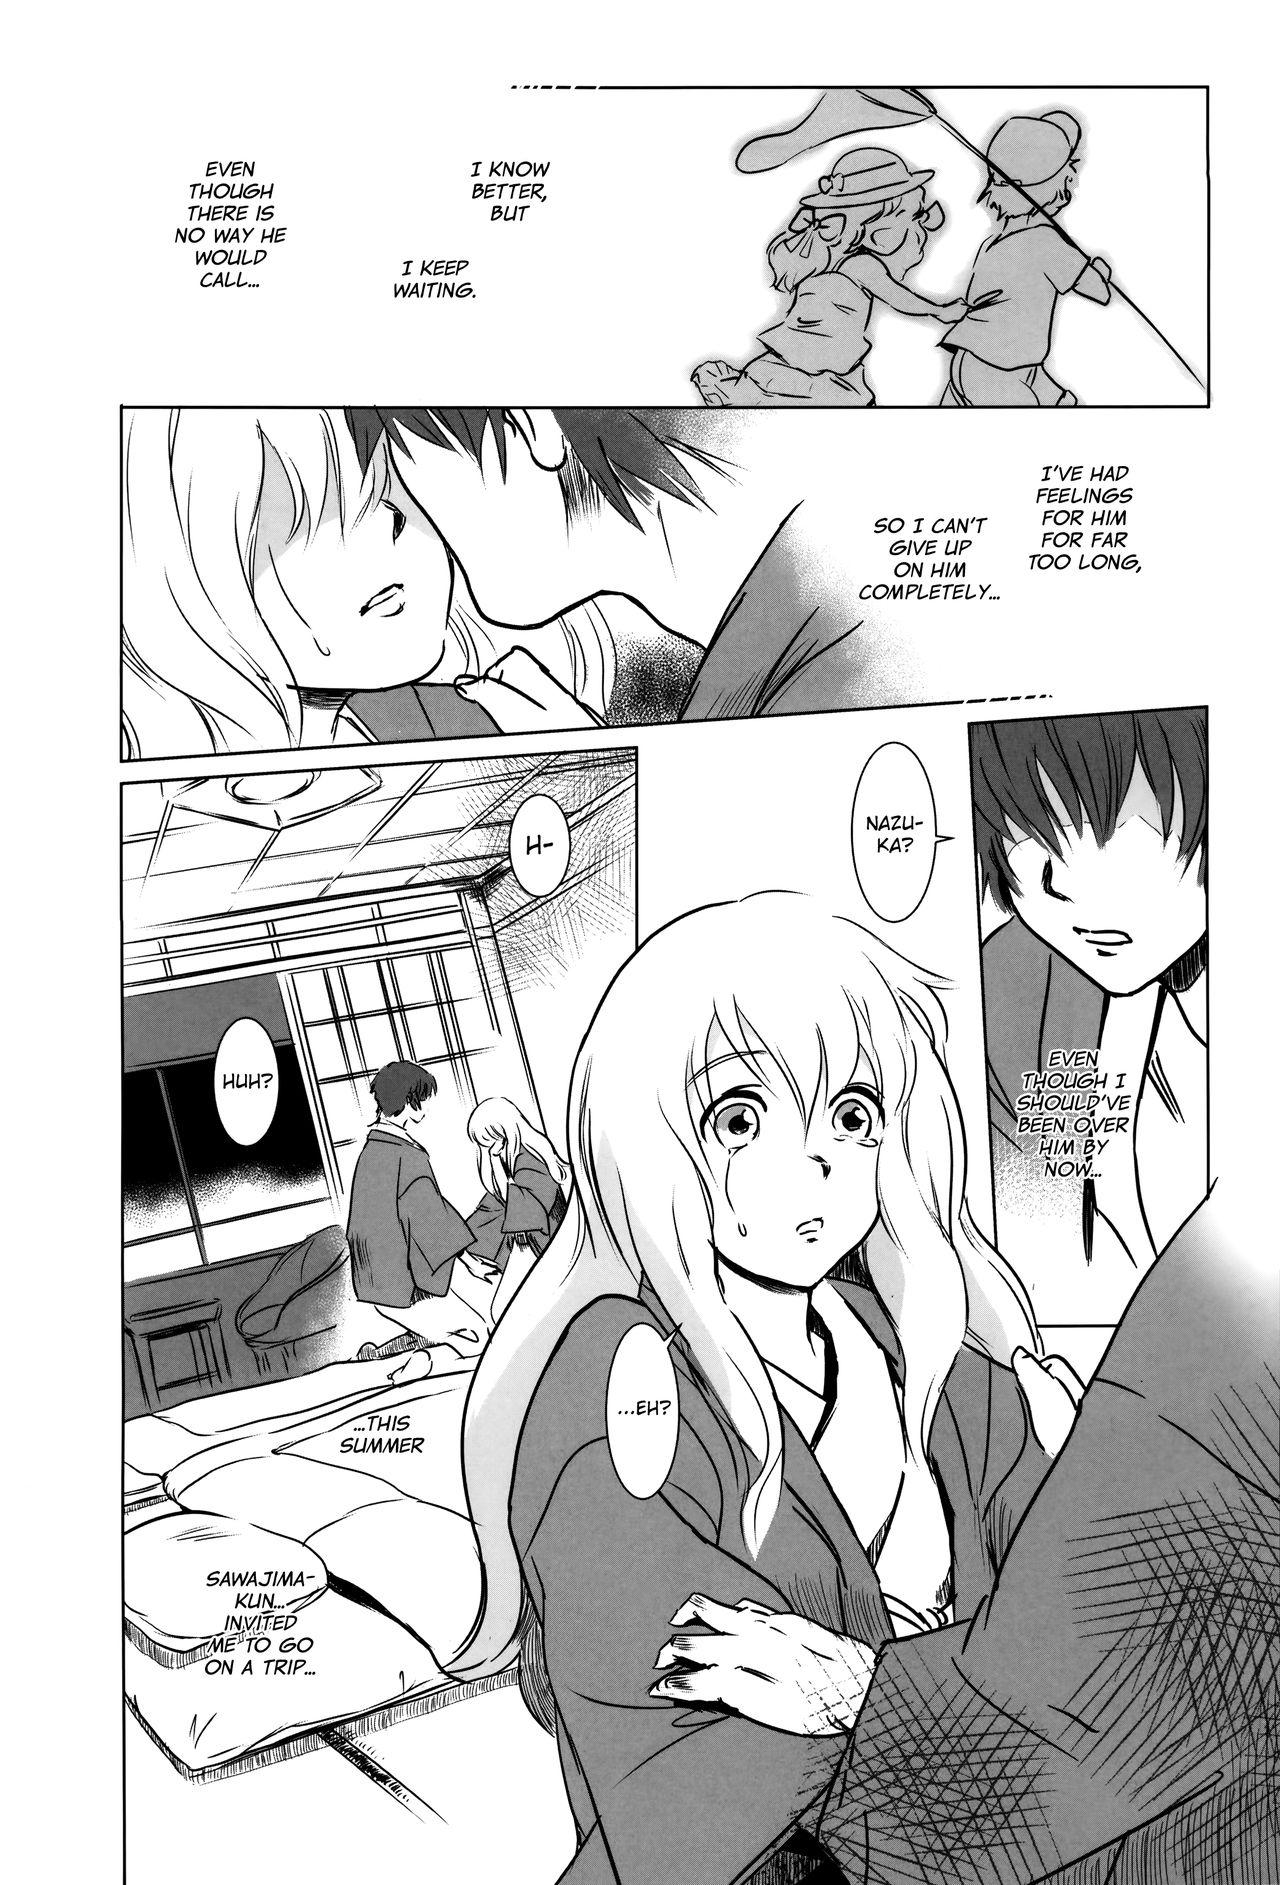 Ex Girlfriends Story of the 'N' Situation - Situation#2 Kokoro Utsuri Cornudo - Page 3